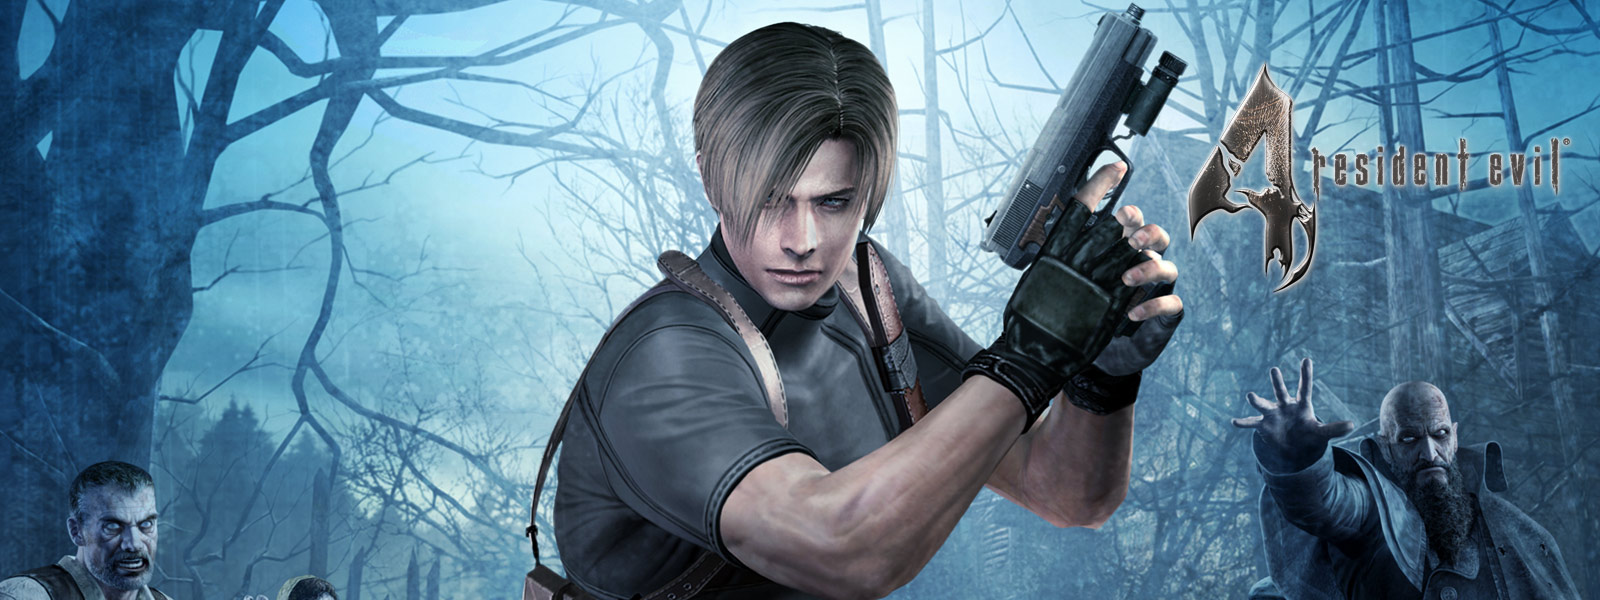 Resident Evil 4, karanlık ormanda zombilerle çevrili, silah tutan karakter